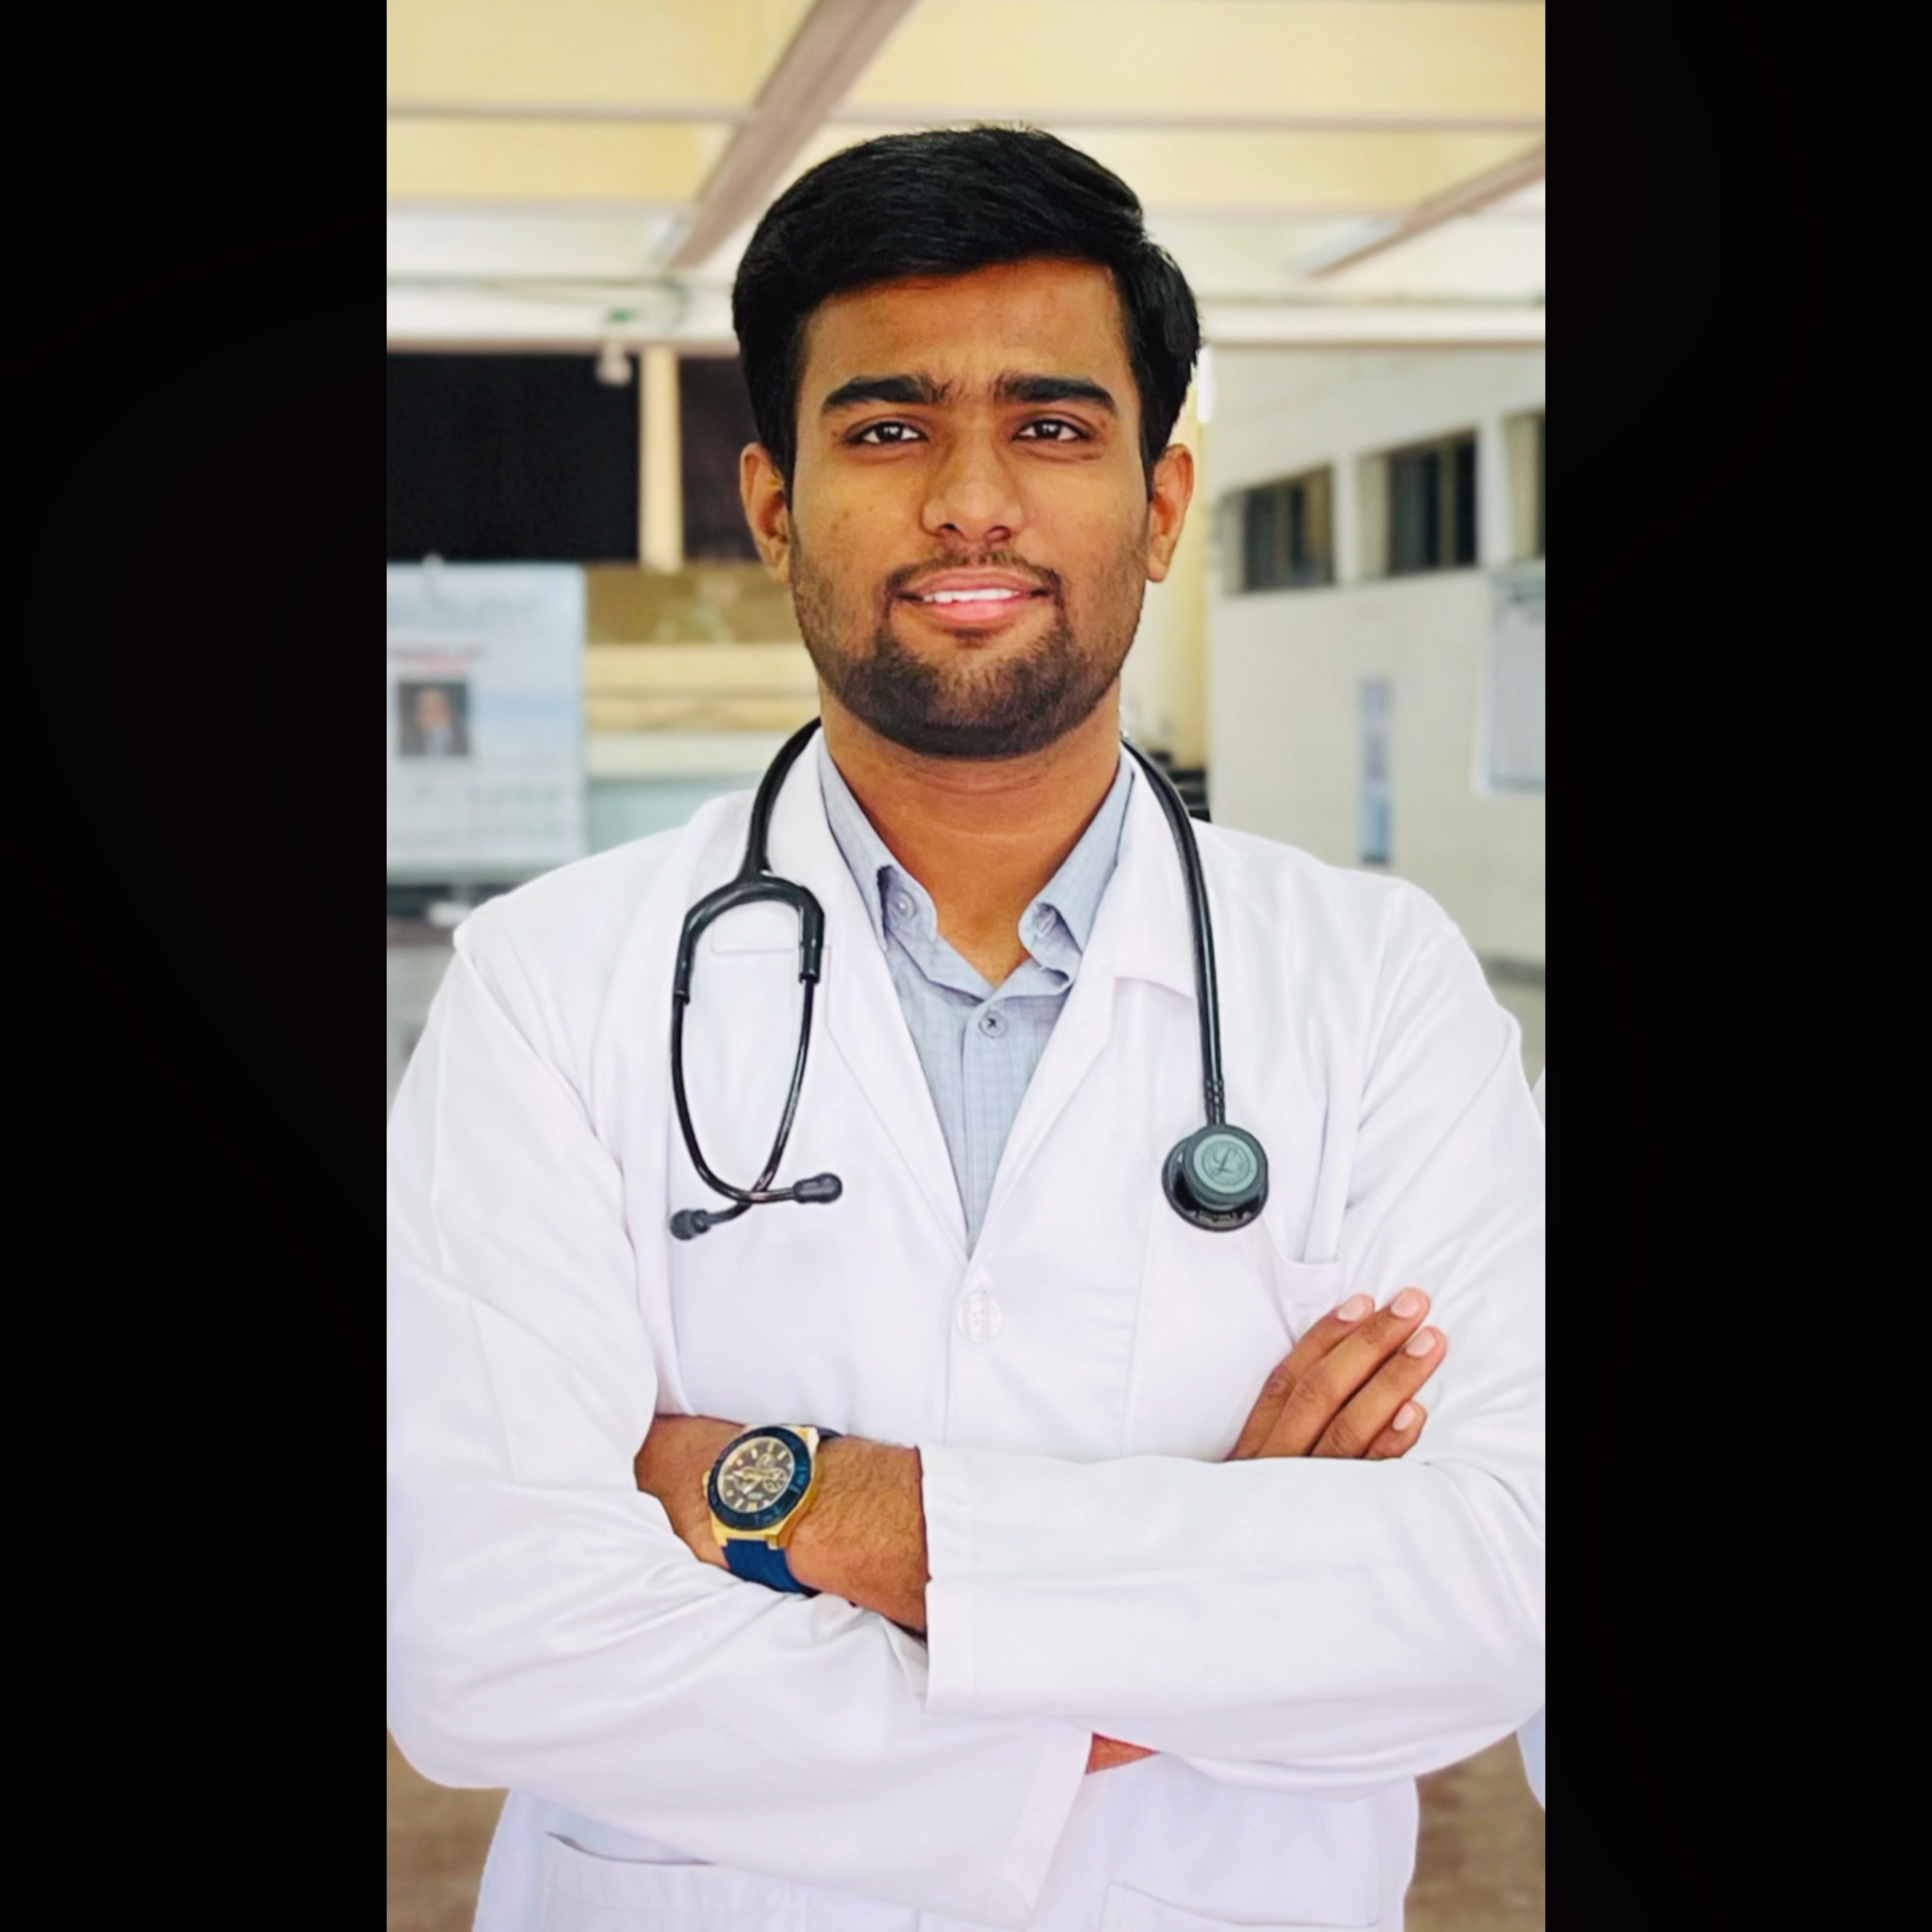 Dr. Ahmed Khan